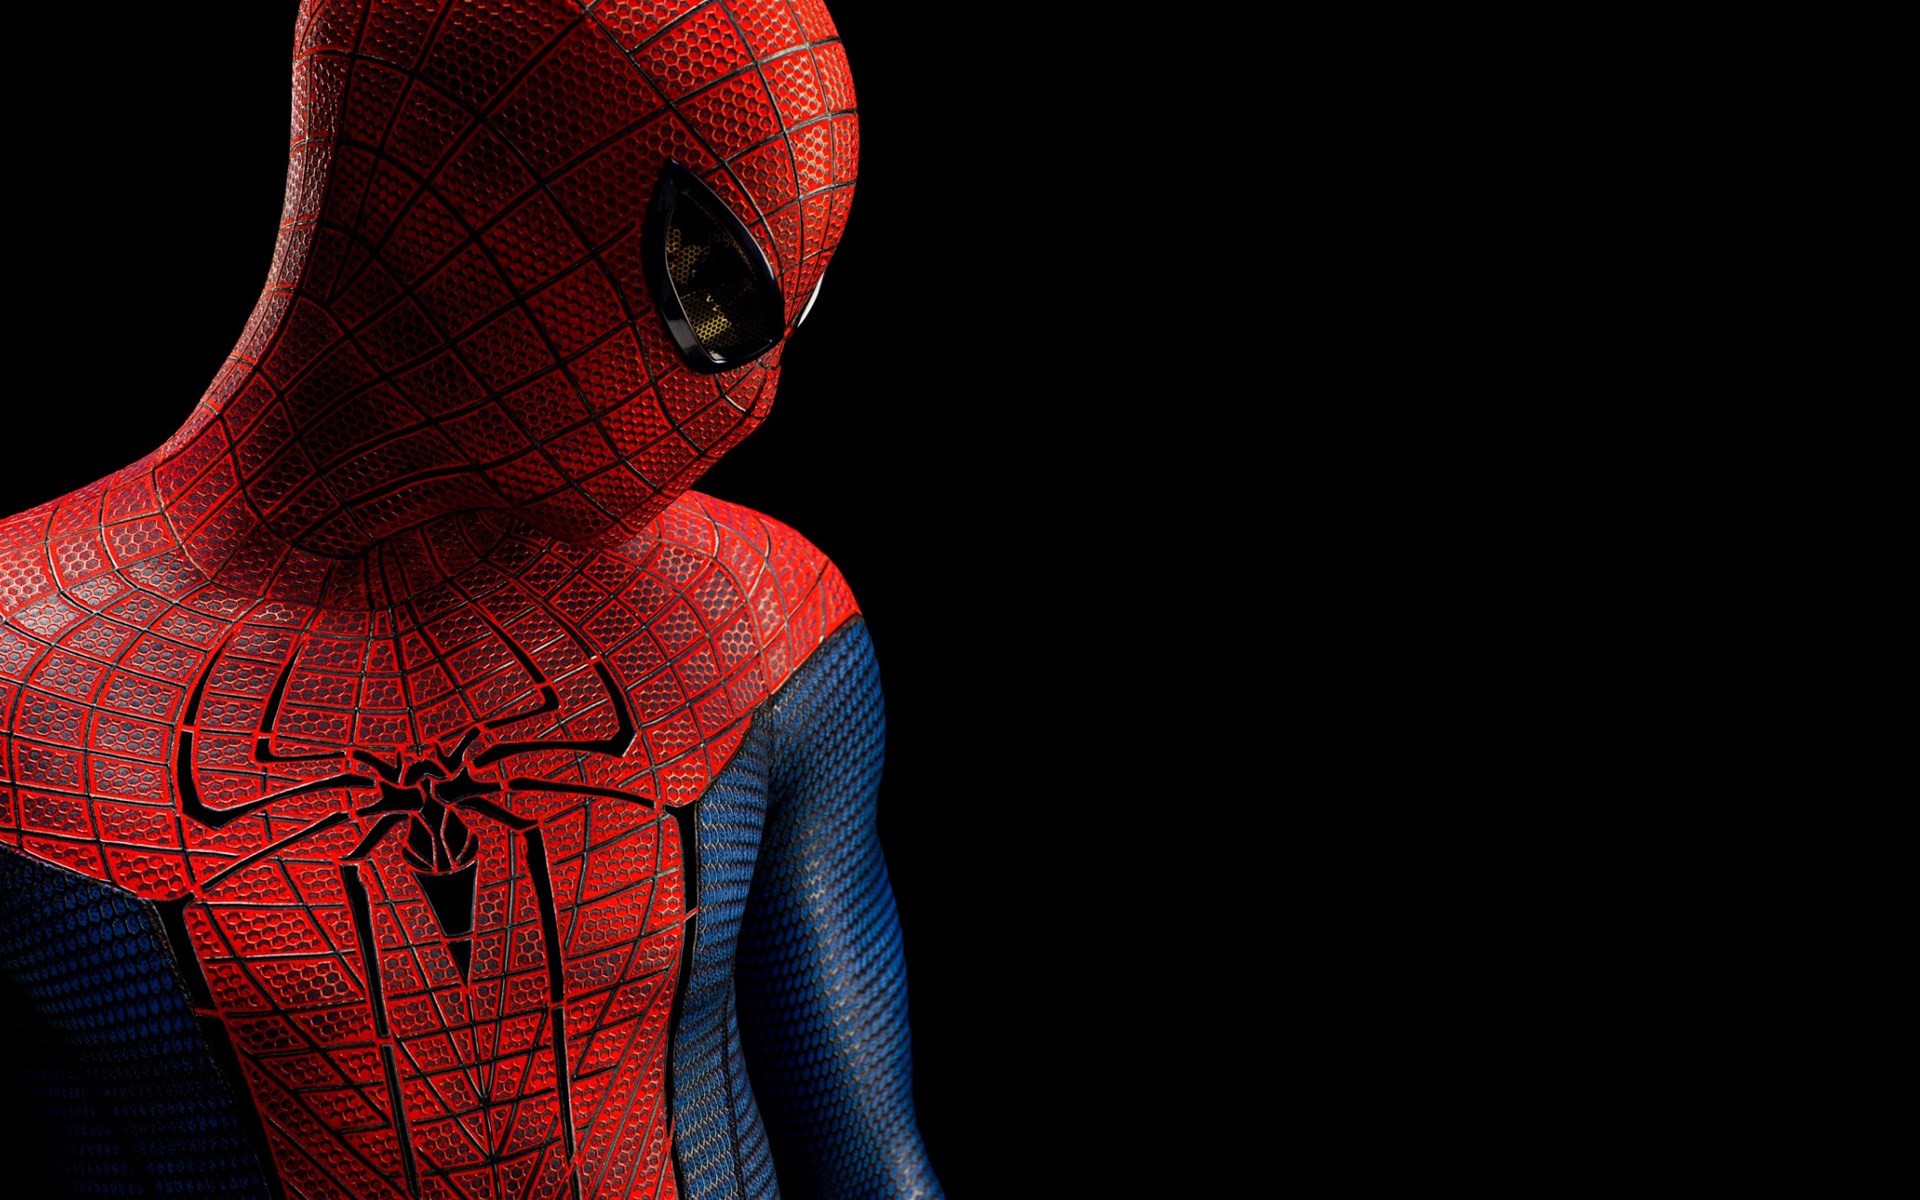 Spiderman wallpaper pack 1080p hd